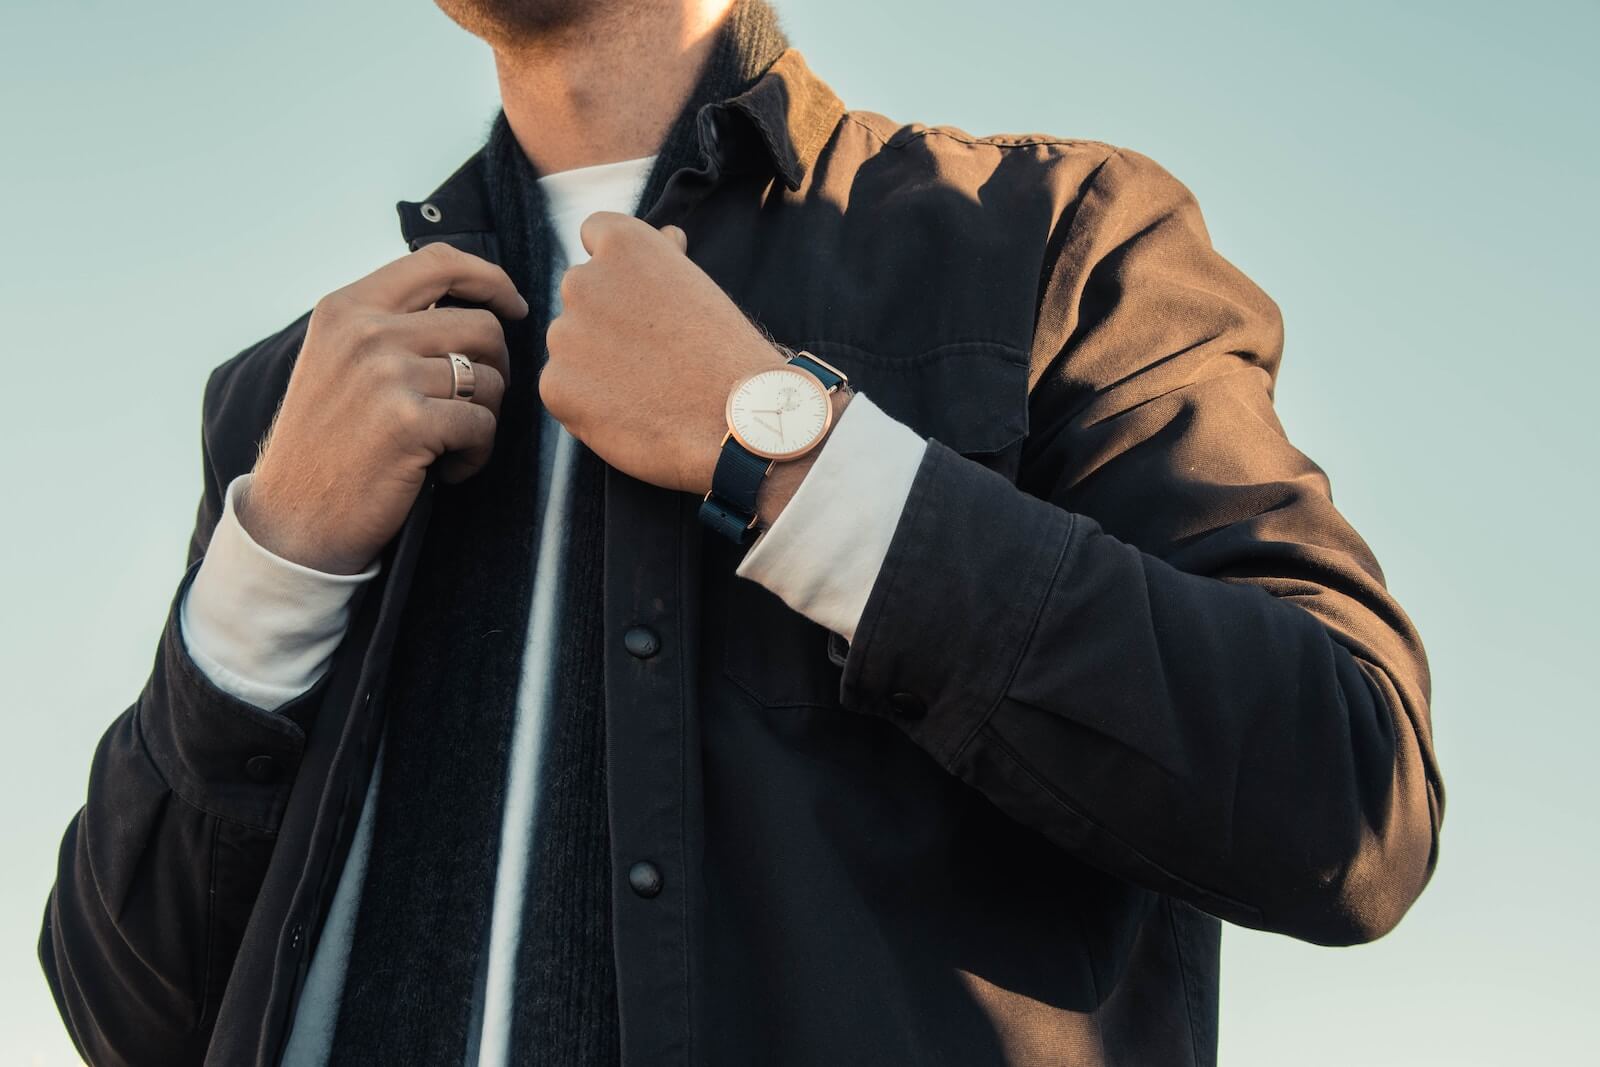 A man wearing a wristwatch